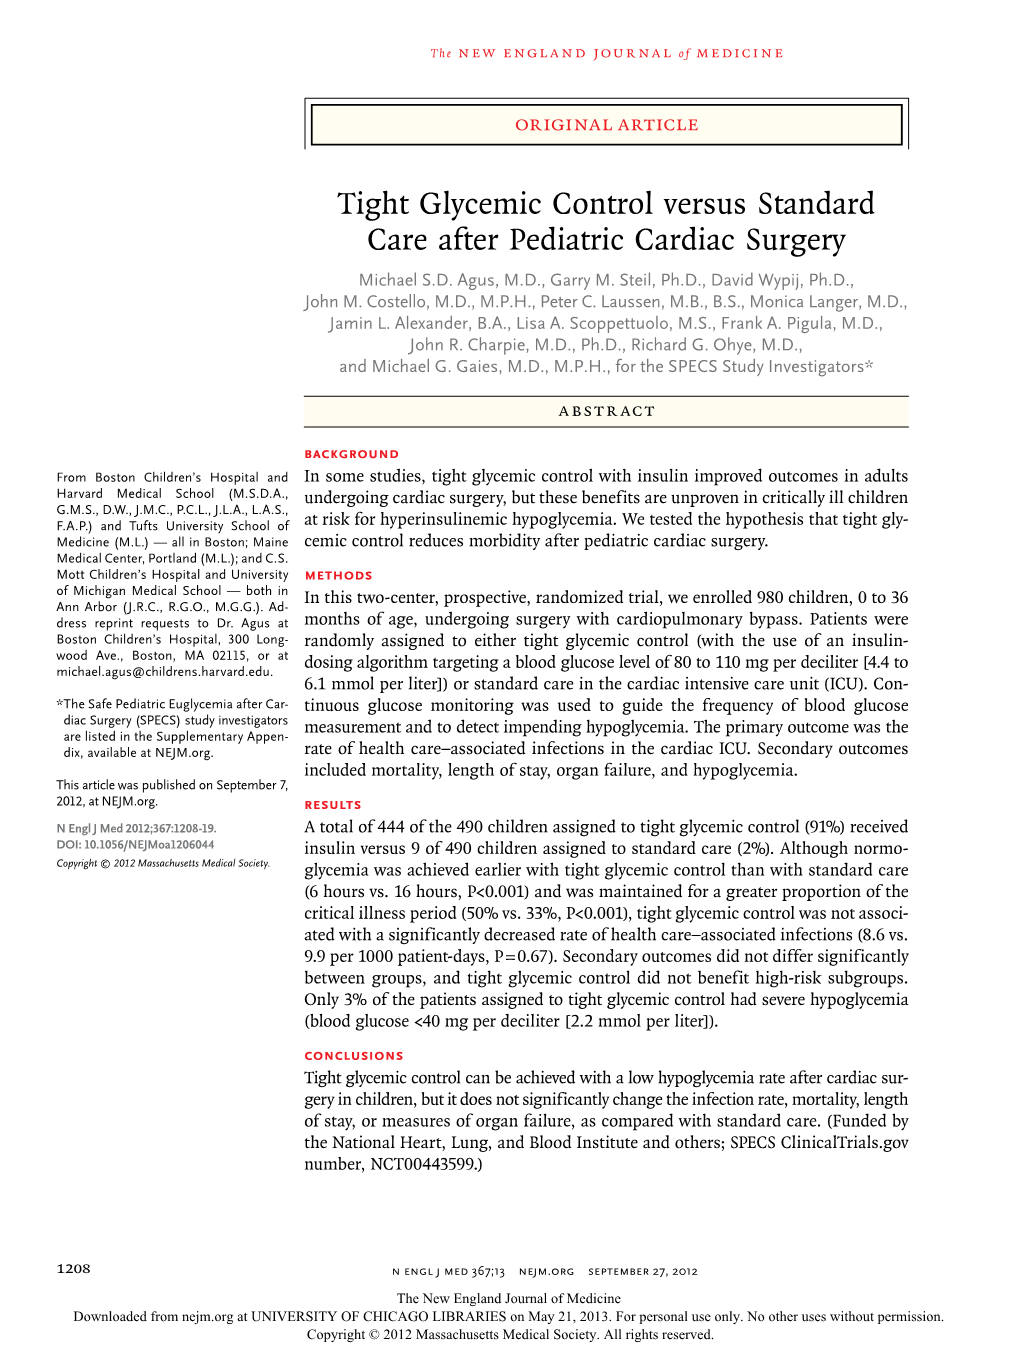 Tight Glycemic Control Versus Standard Care After Pediatric Cardiac Surgery Michael S.D